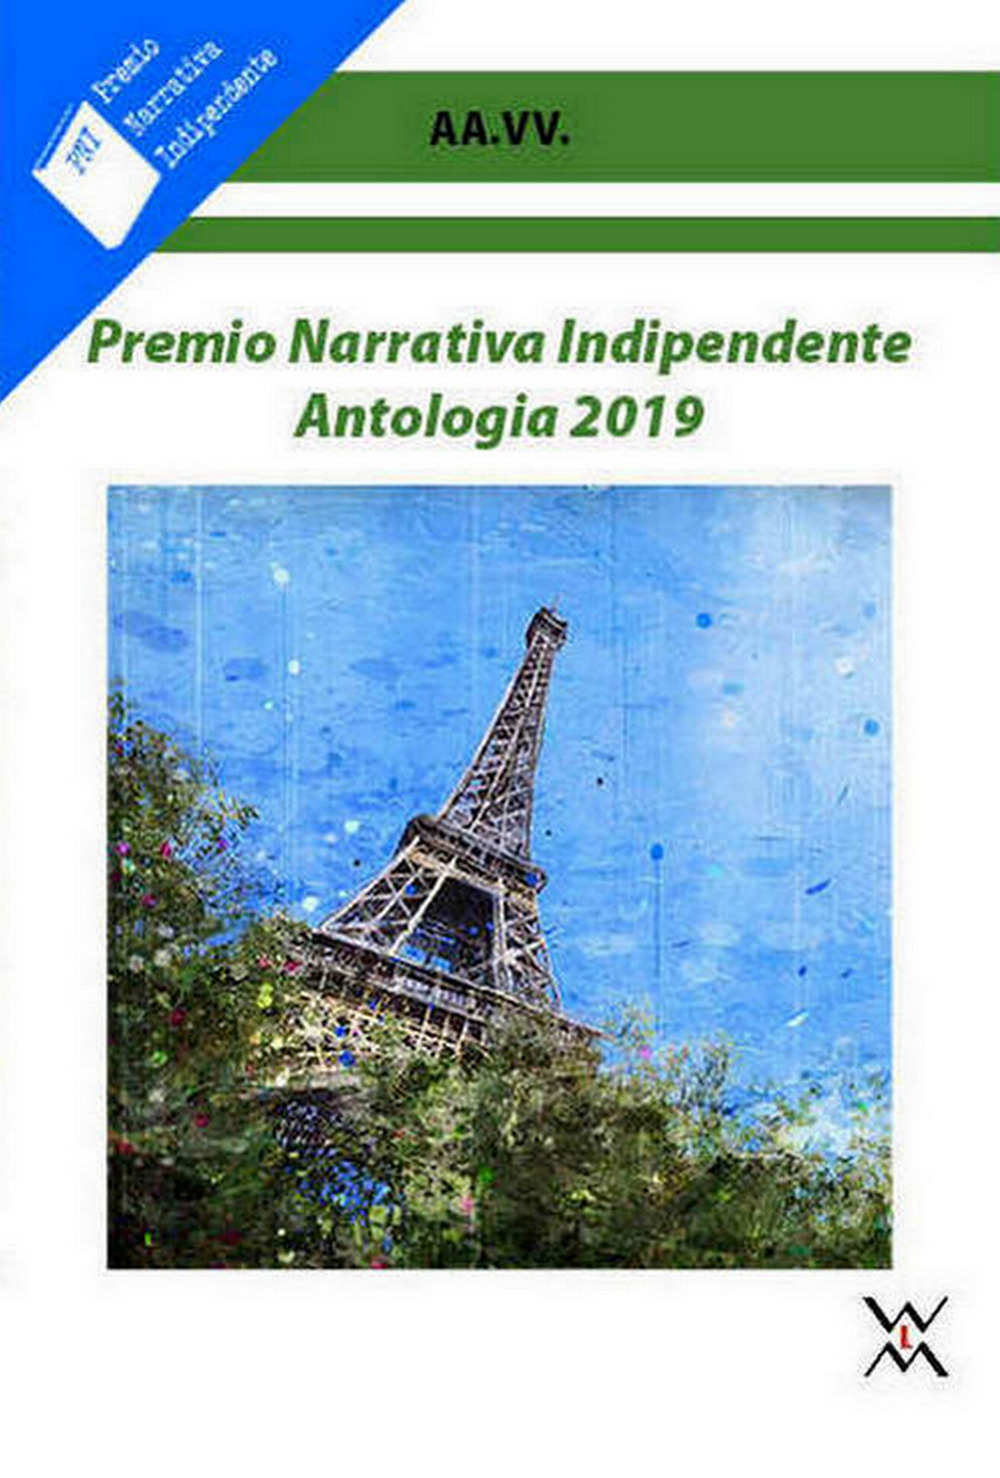 Image of Premio narrativa indipendente. Antologia 2019